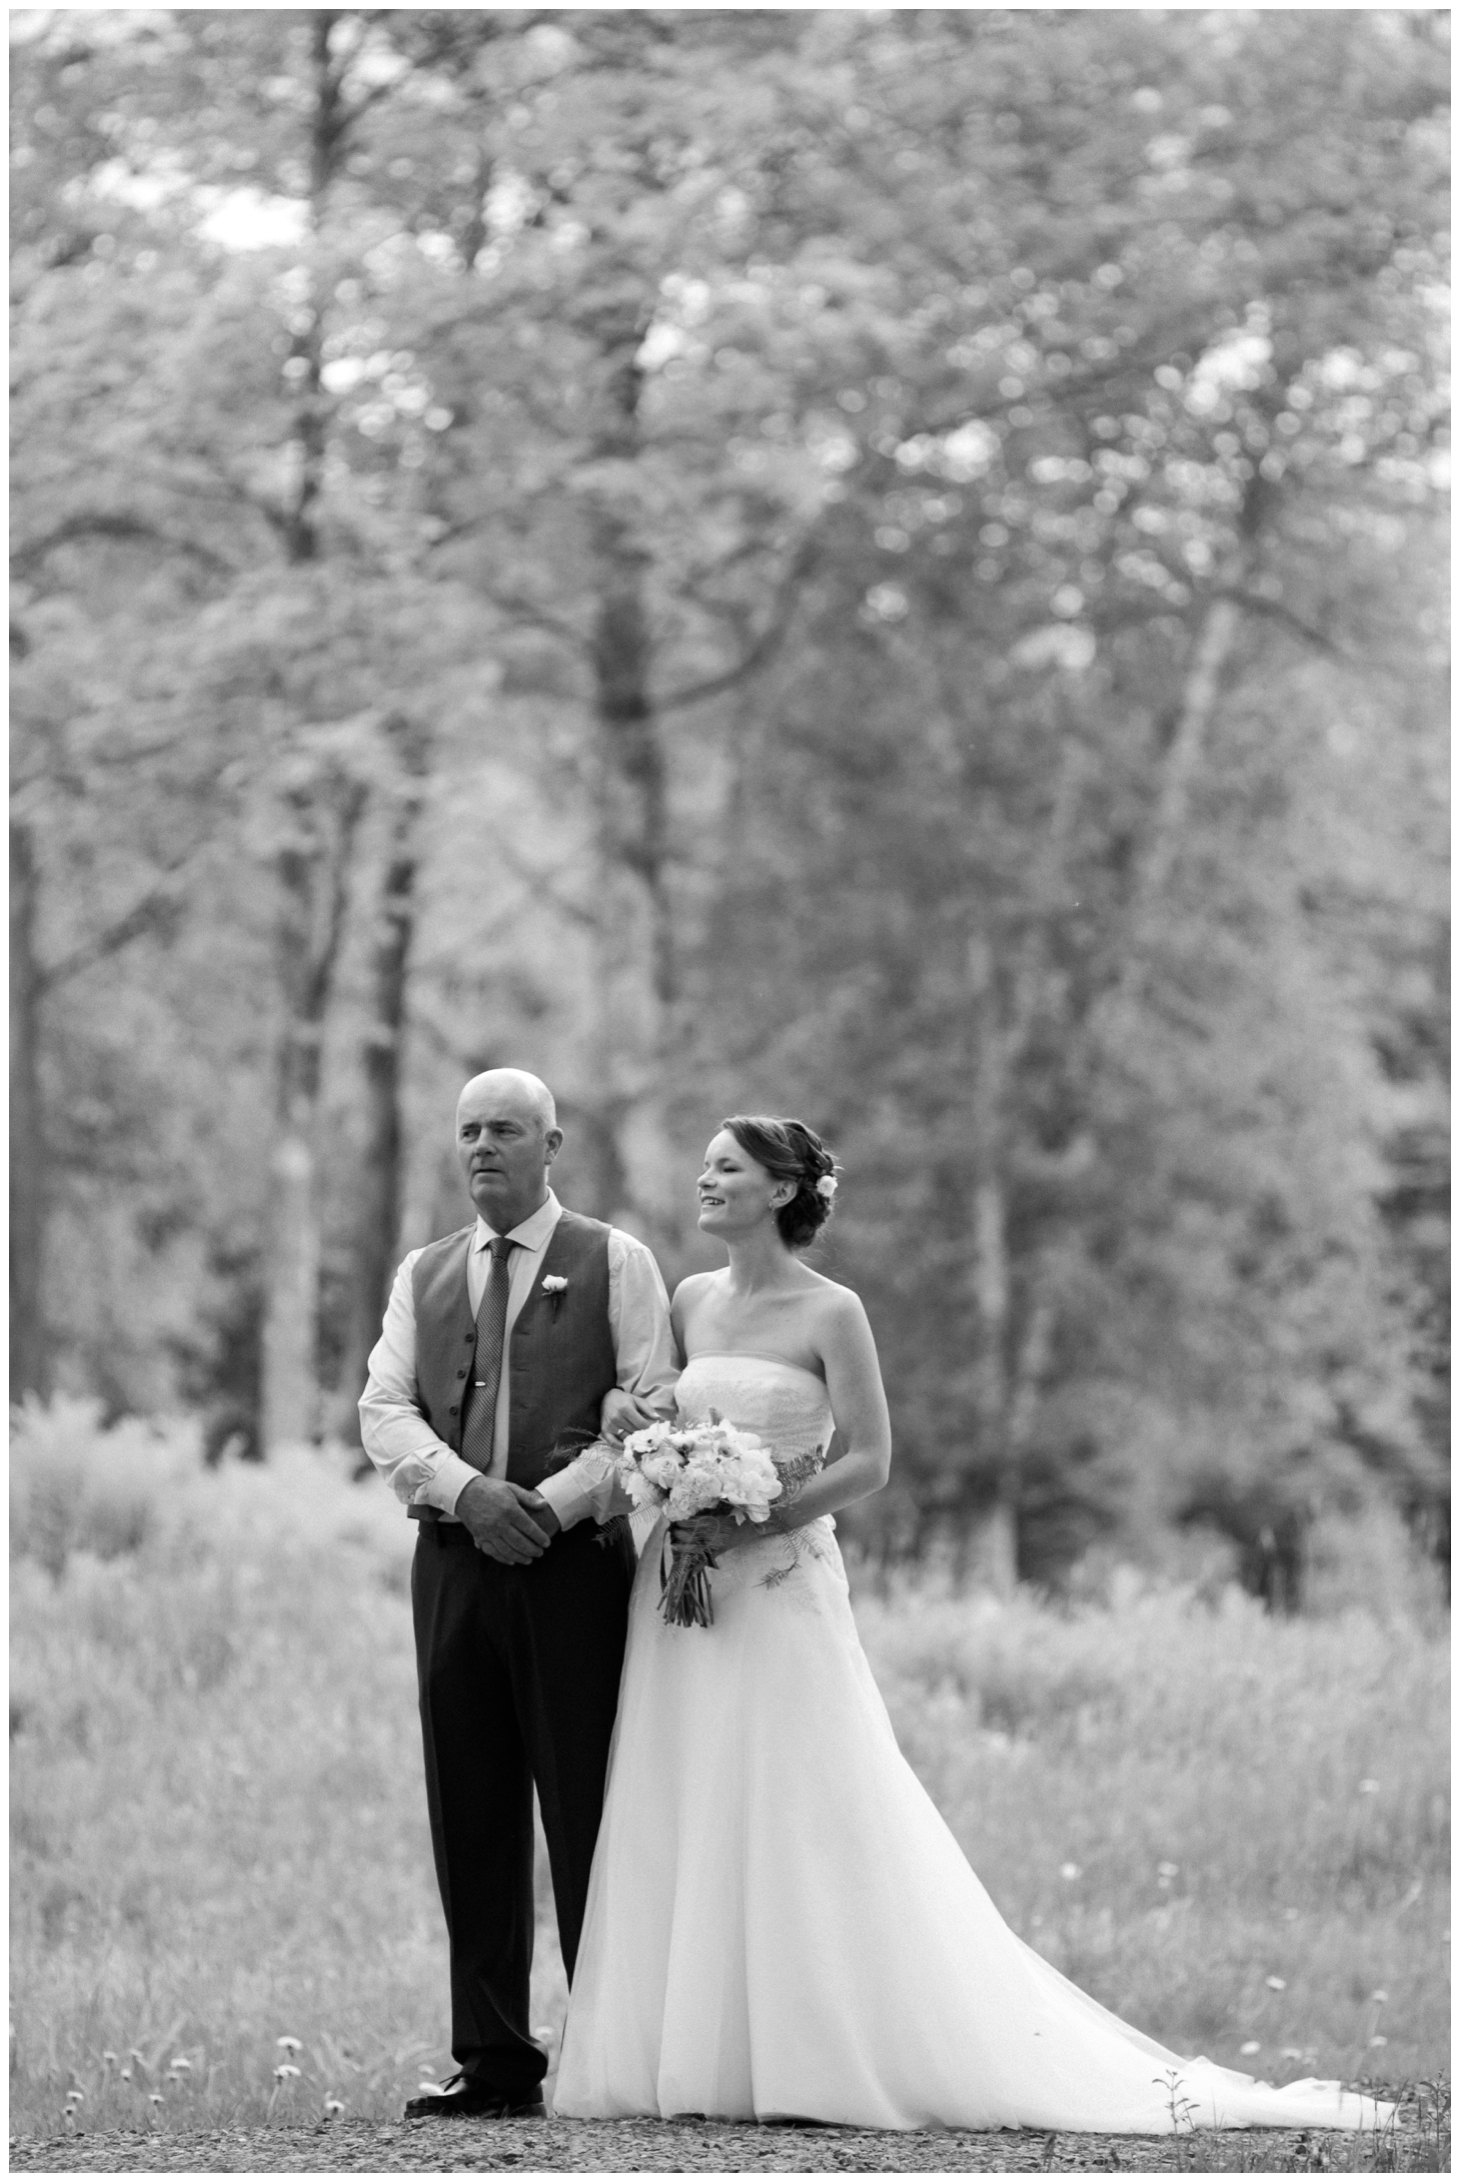 Kris & Christine's Mountain-Inspired Vermont Lodge Wedding - by Sarah Bradshaw Photography_0045